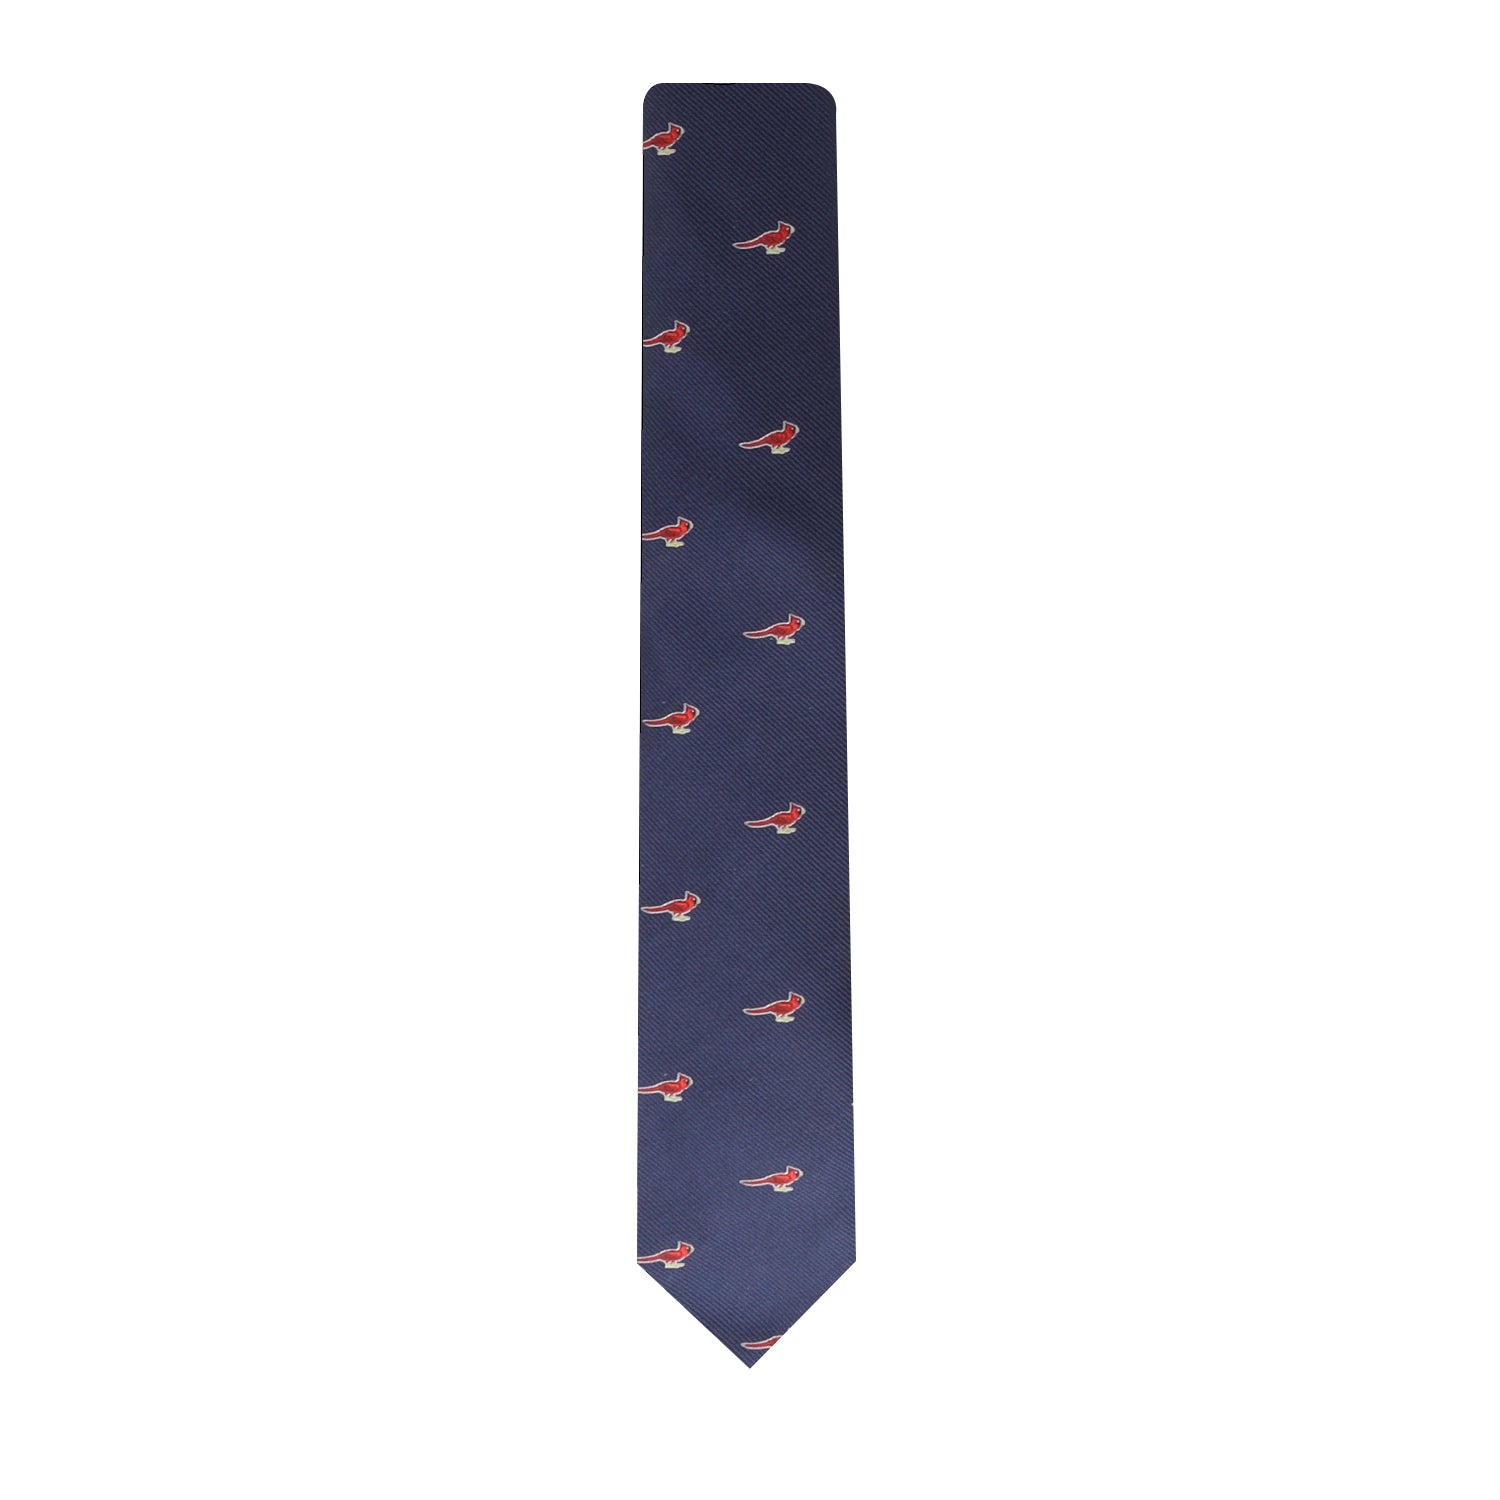 A blue tie with a vivid Cardinal bird on it.